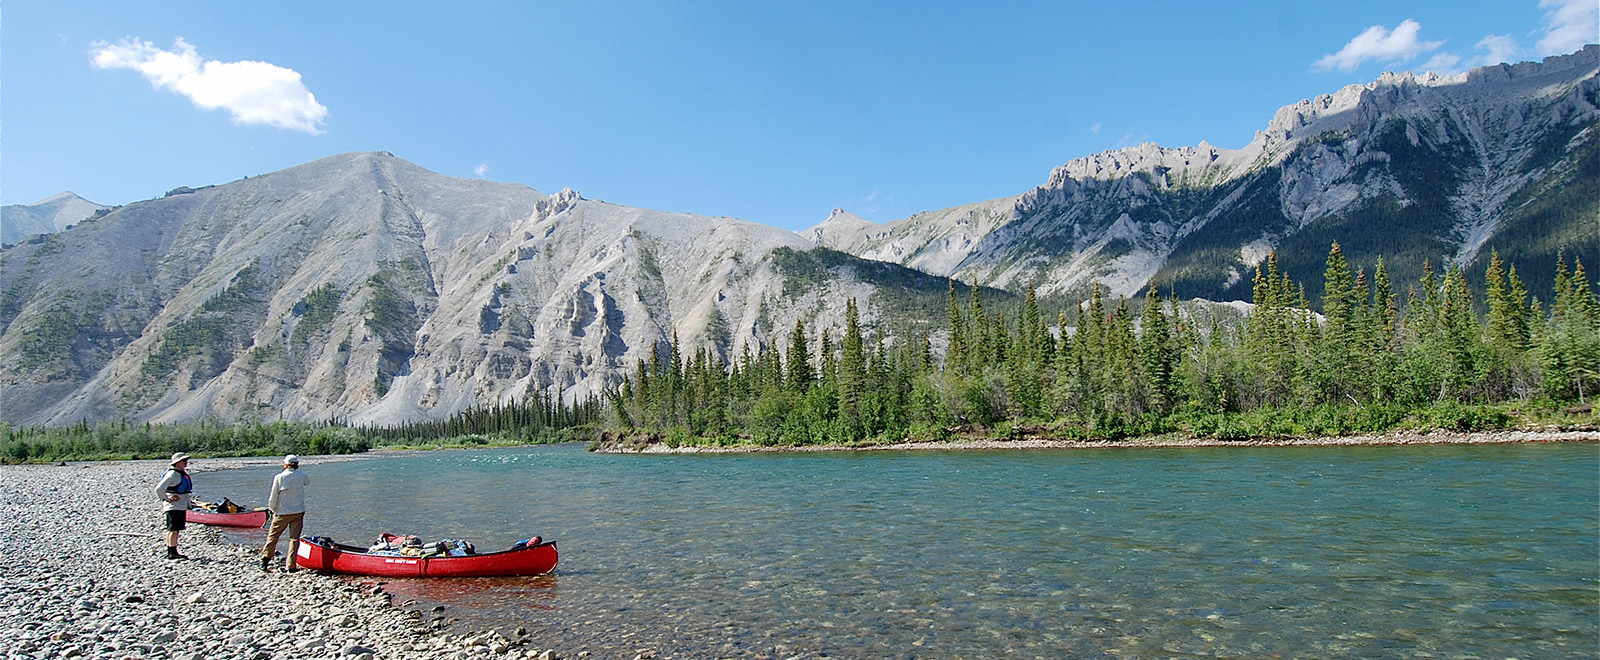 canoe water adventure landscape